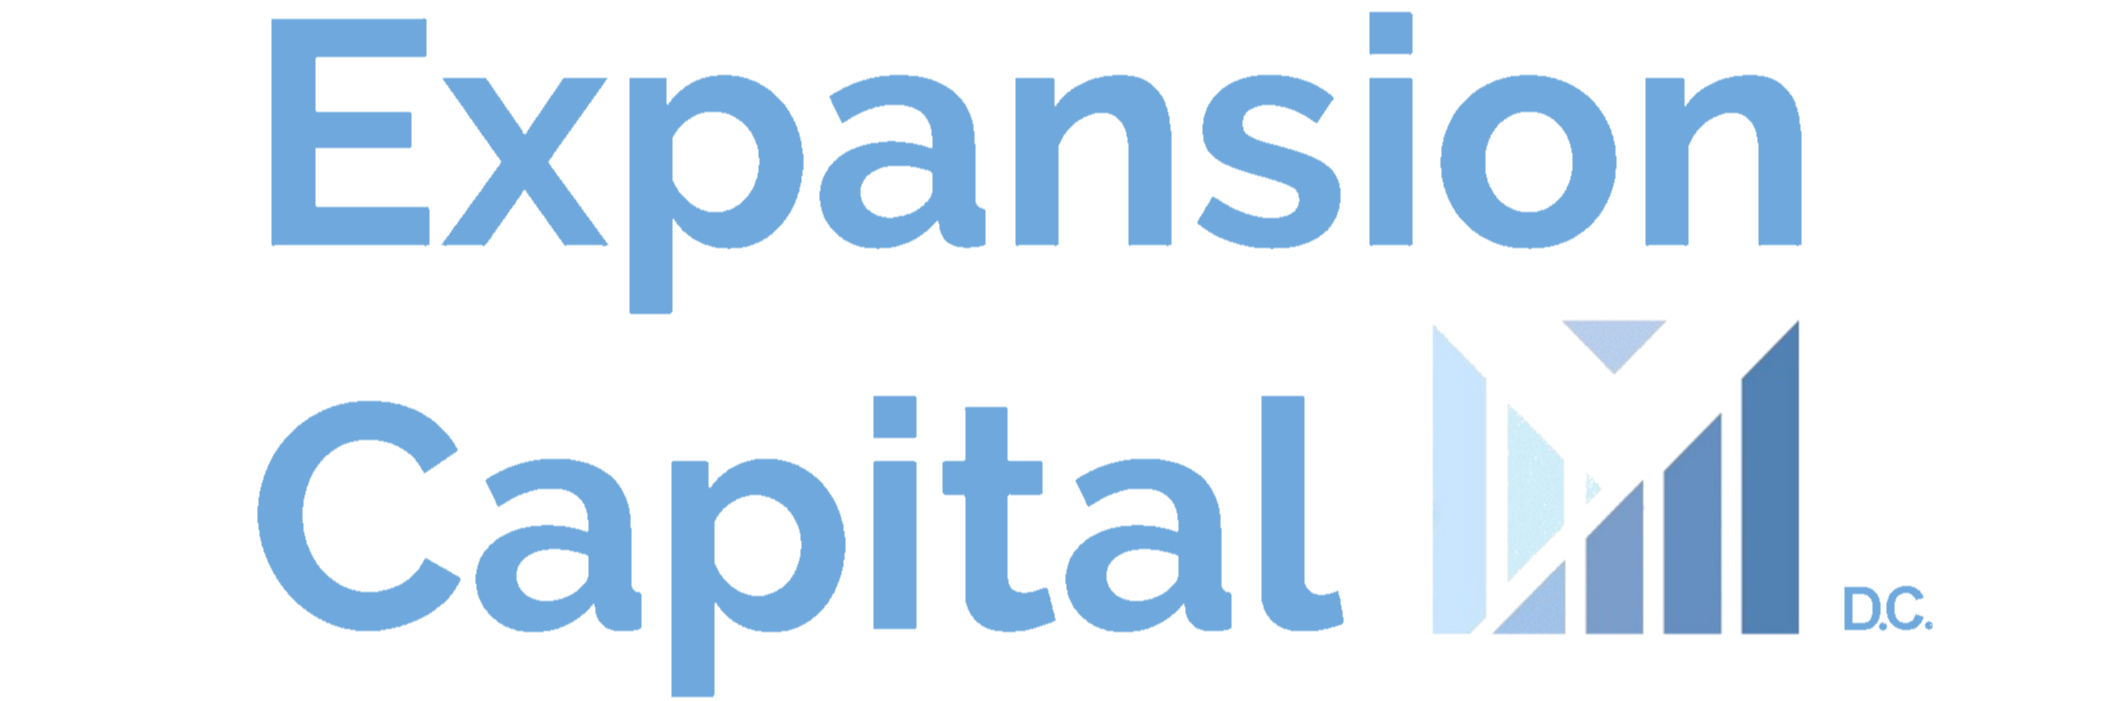 Logo Expansion Capital DC